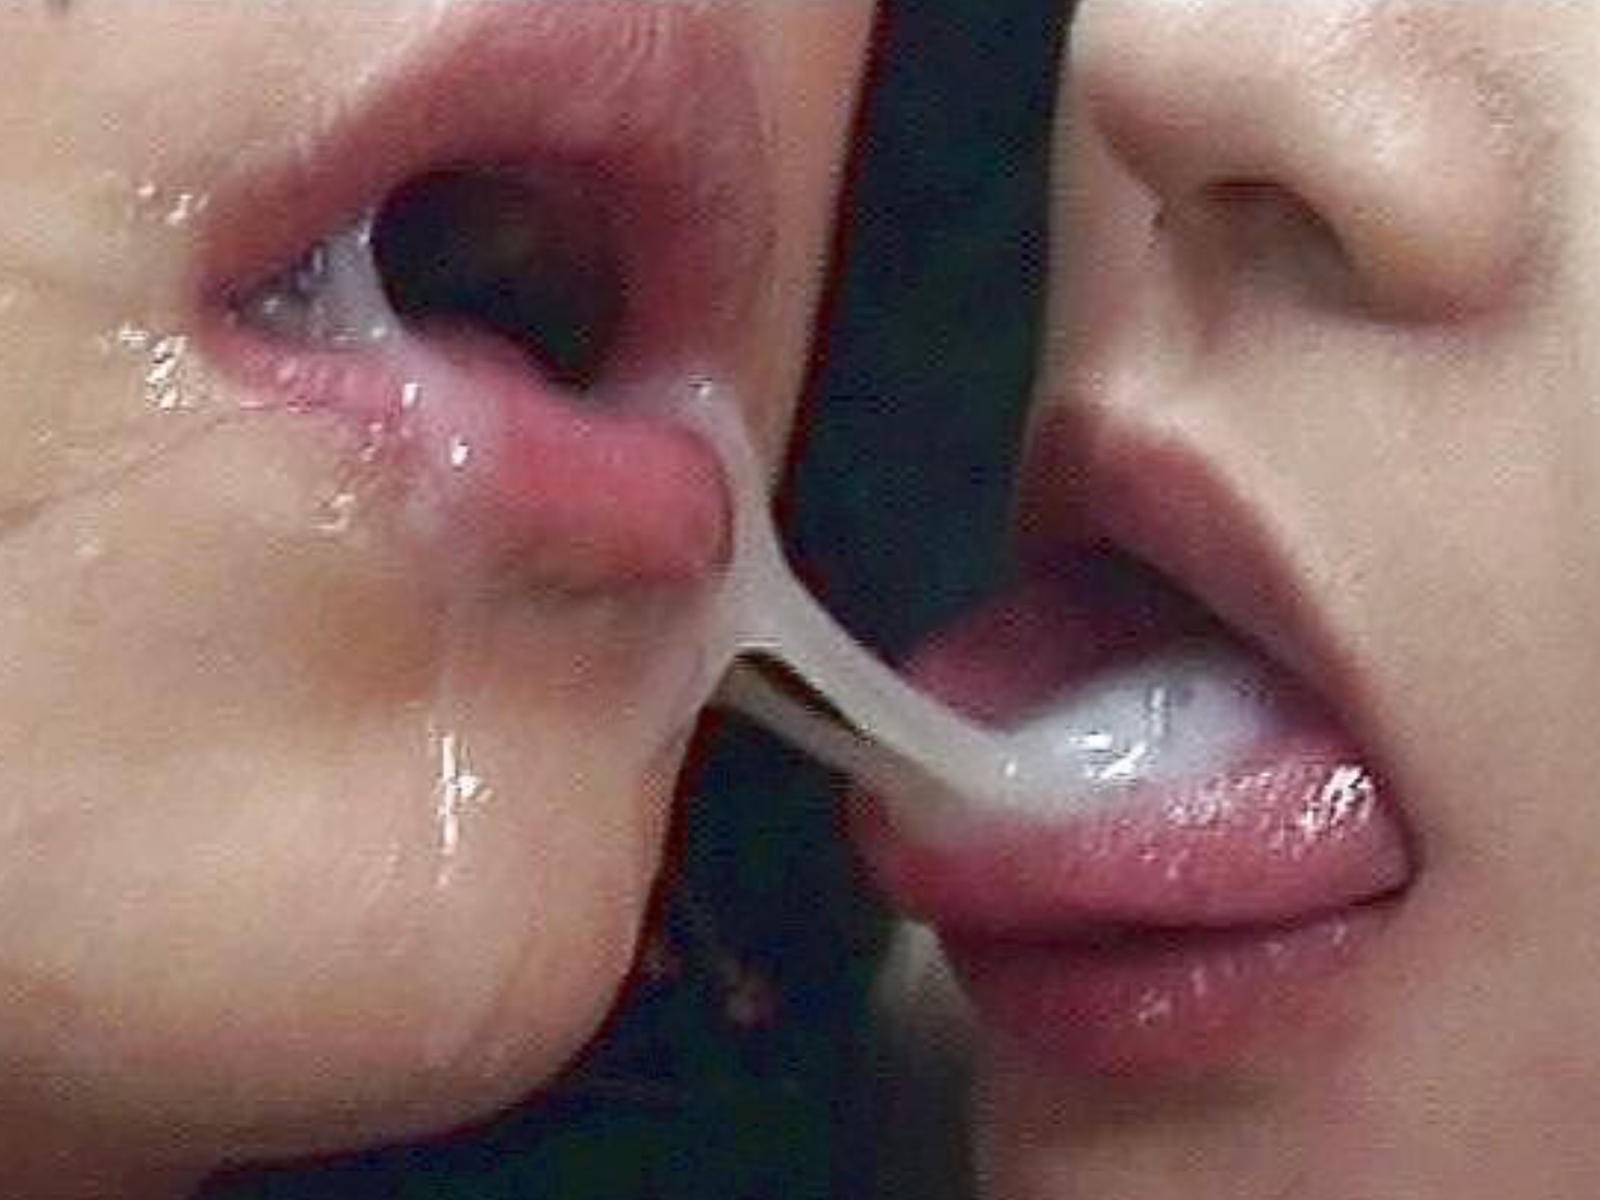 Порно видео девушки целуются со спермой во рту. Смотреть девушки целуются со спермой во рту онлайн